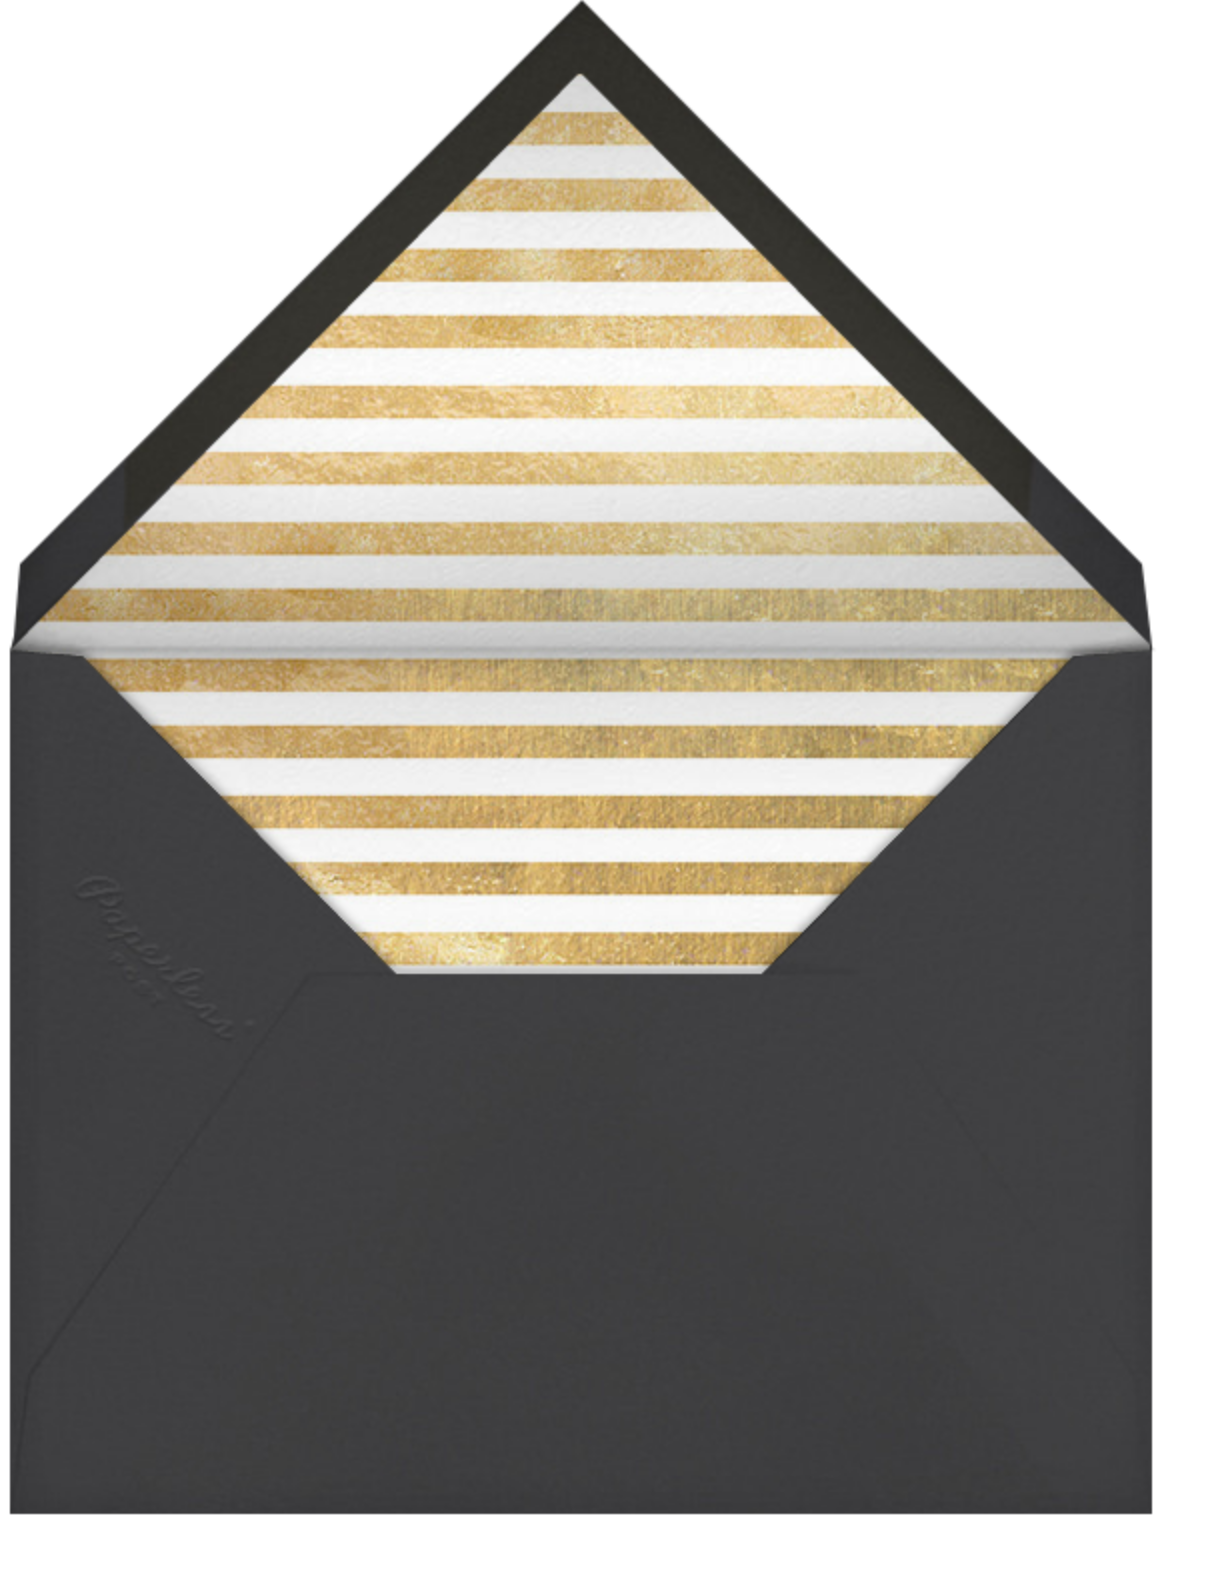 City Lights II (Invitation) - Slate/Gold  - kate spade new york - Envelope